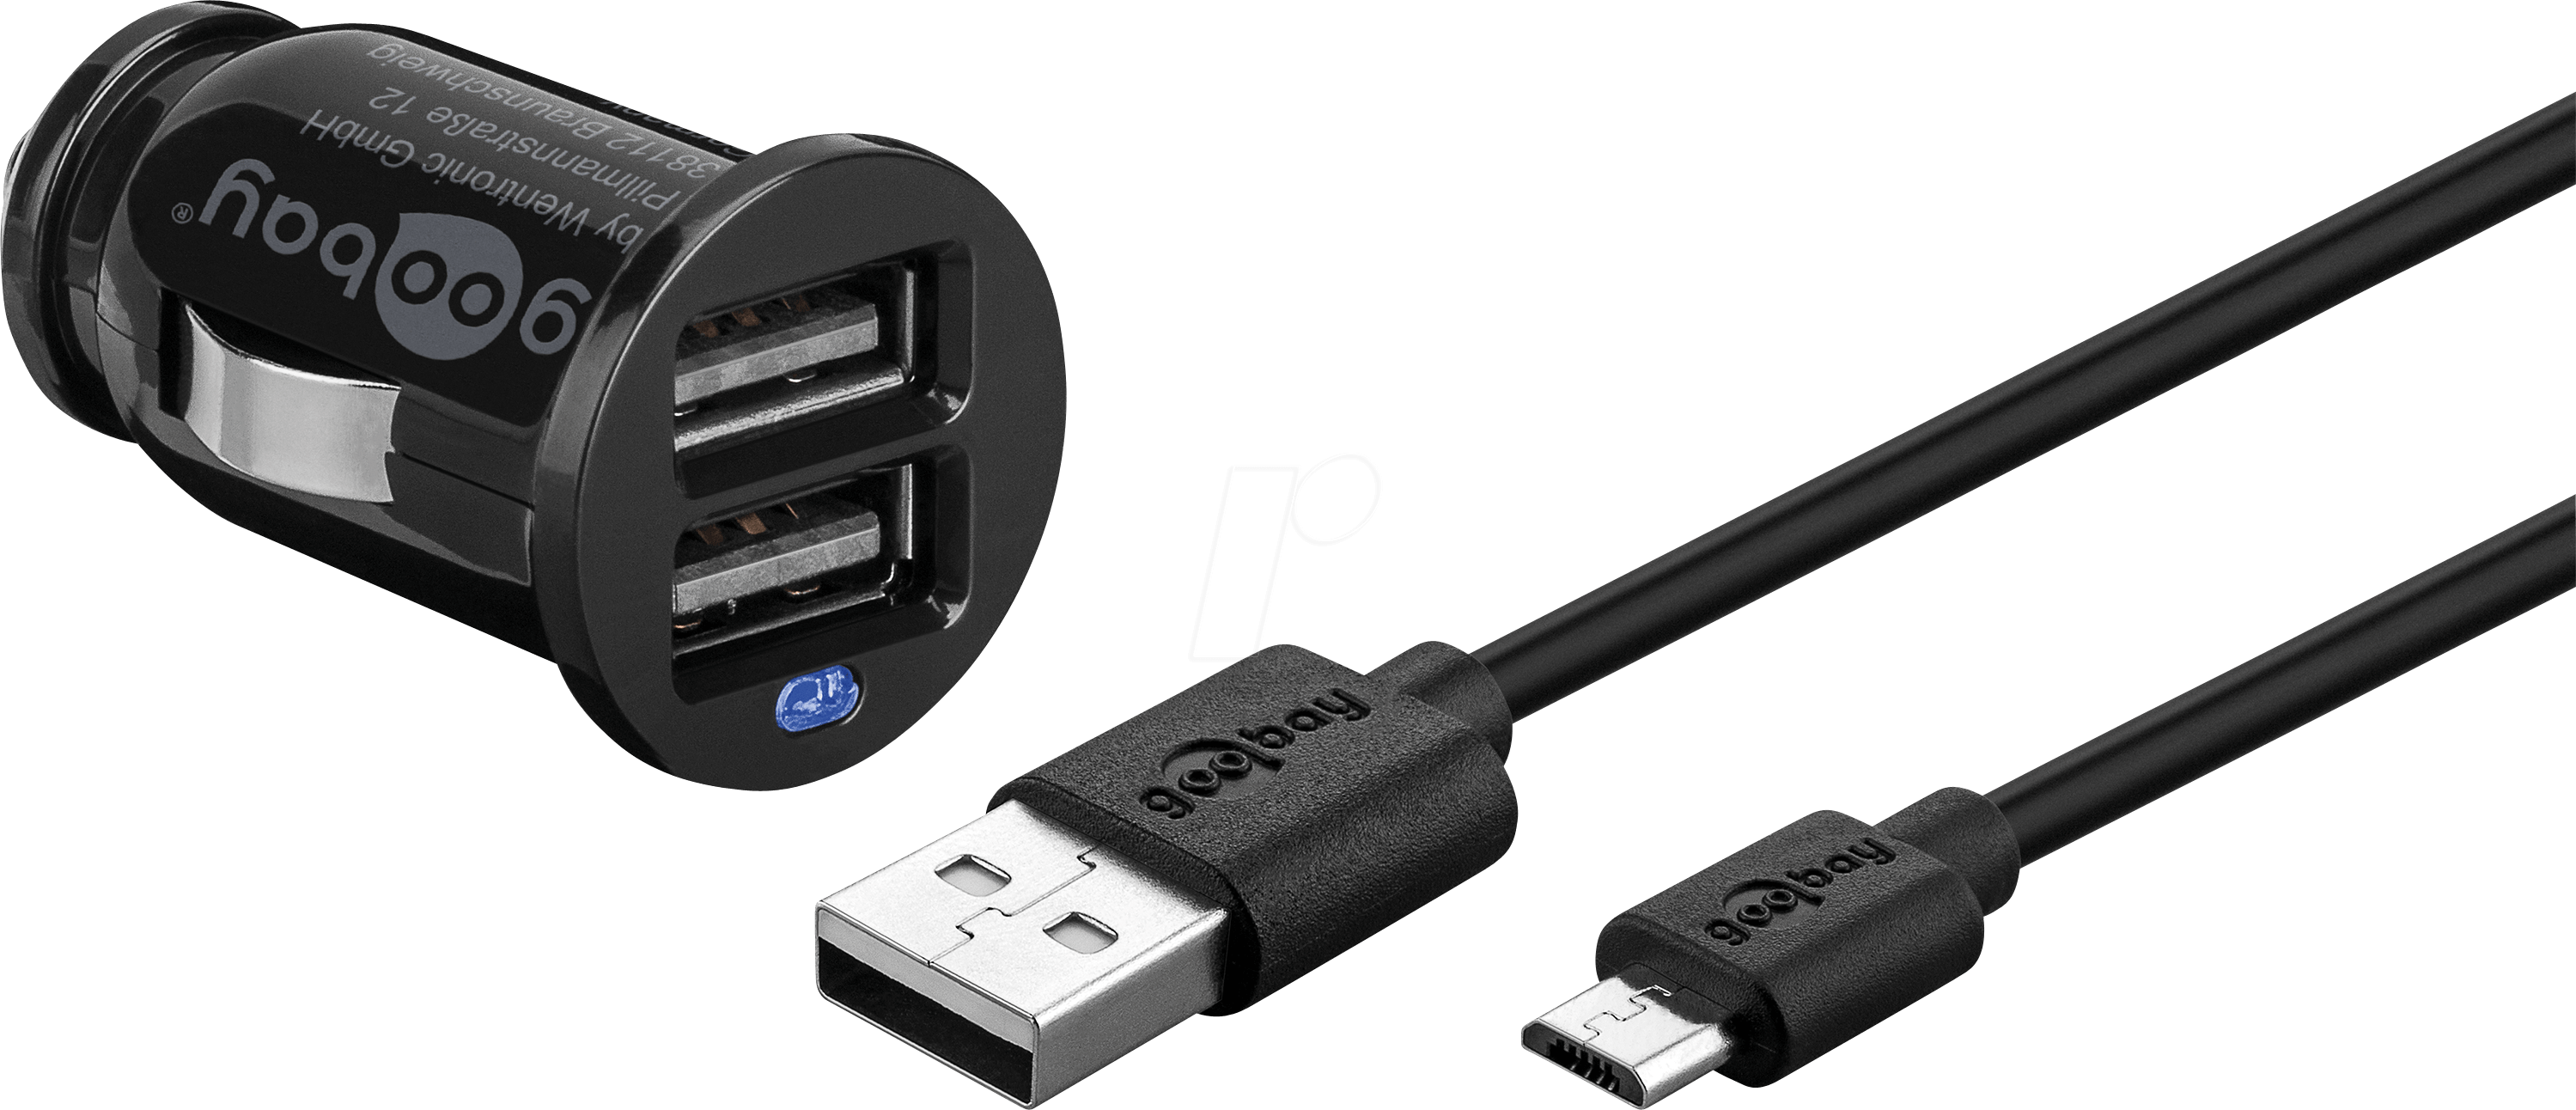 GOOBAY 71692 - USB-Ladegerät, 5 V, 2,4 A, Kfz, Set, 2 USB-Ports